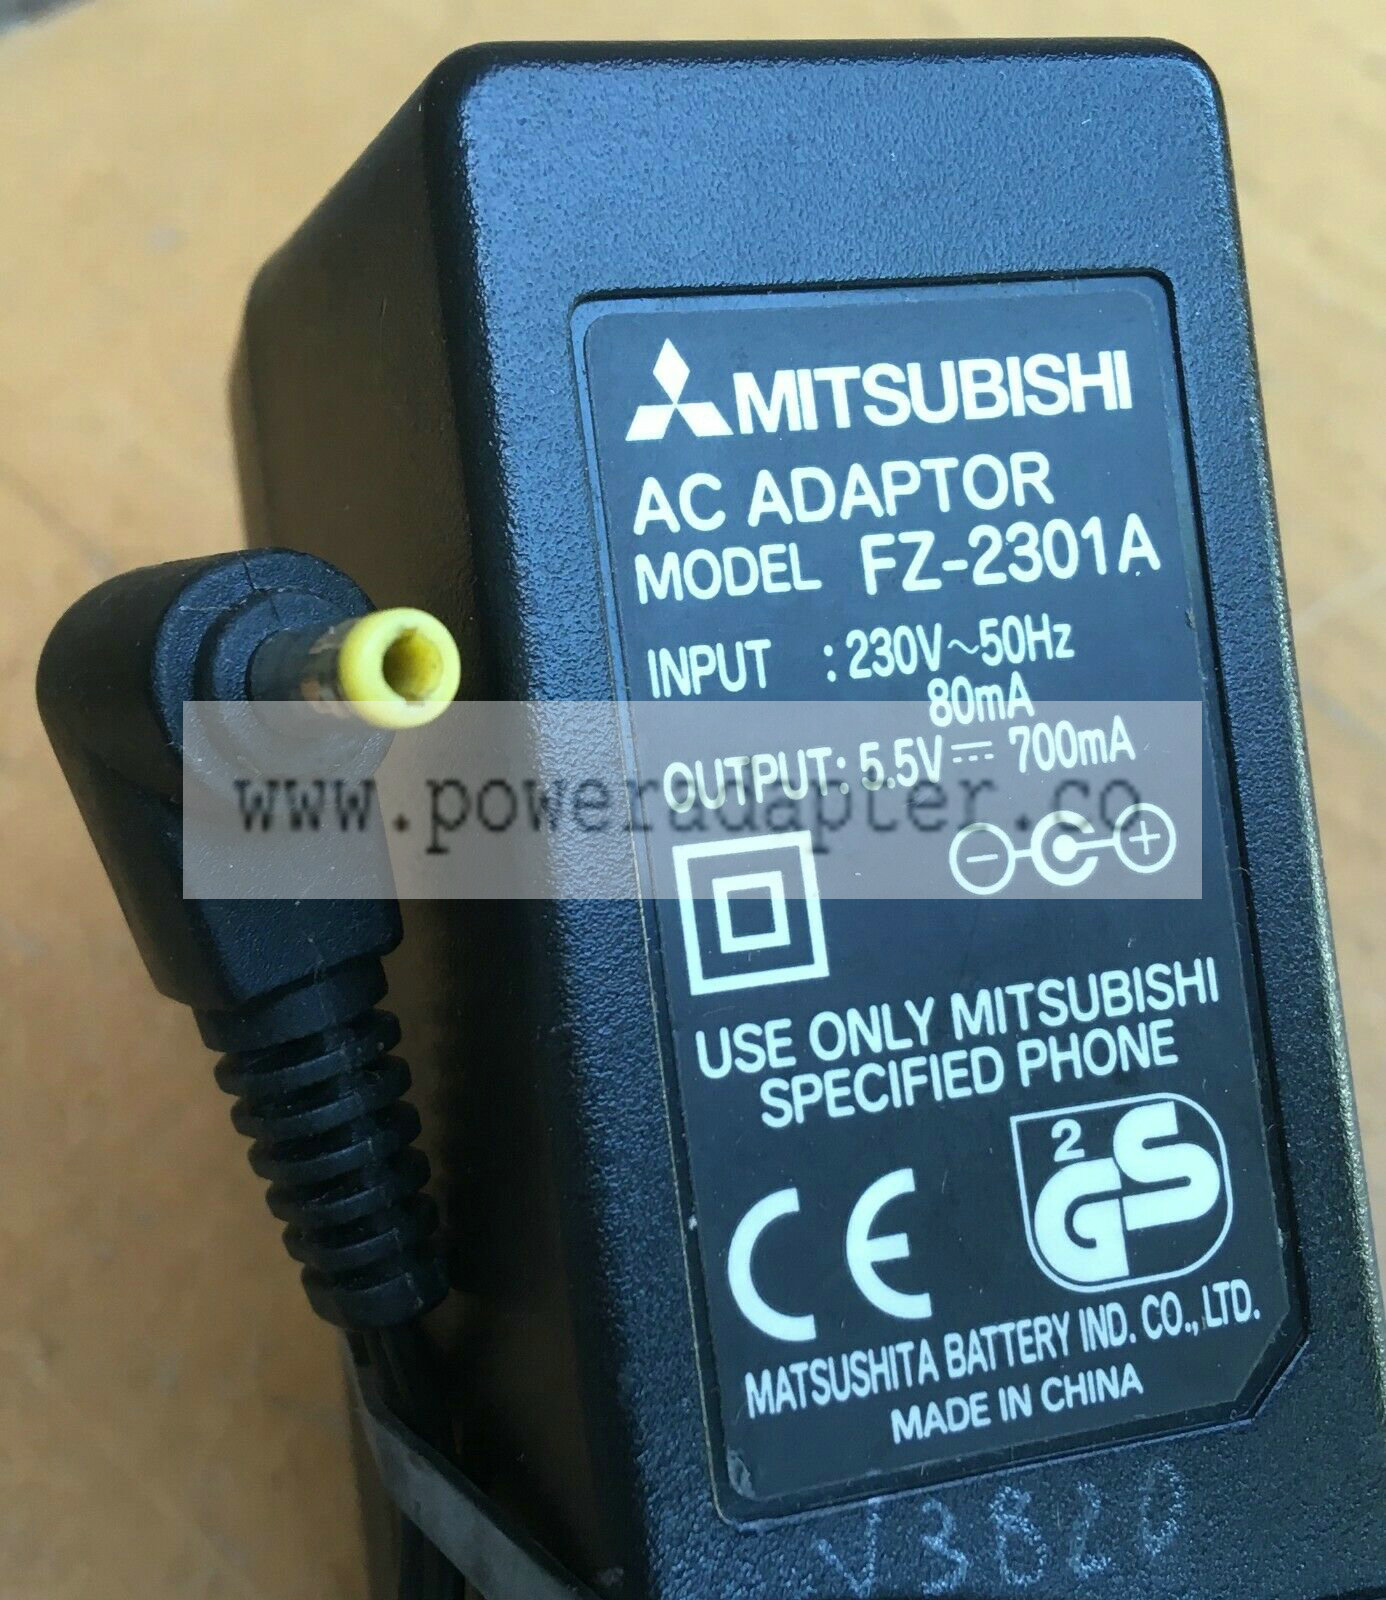 Genuine Mitsubishi 5.2v 700mA fz-2301A Power Supply Charger MT30, MT35, MT35i, M Genuine Mitsubishi 5.2v 700mA fz-23